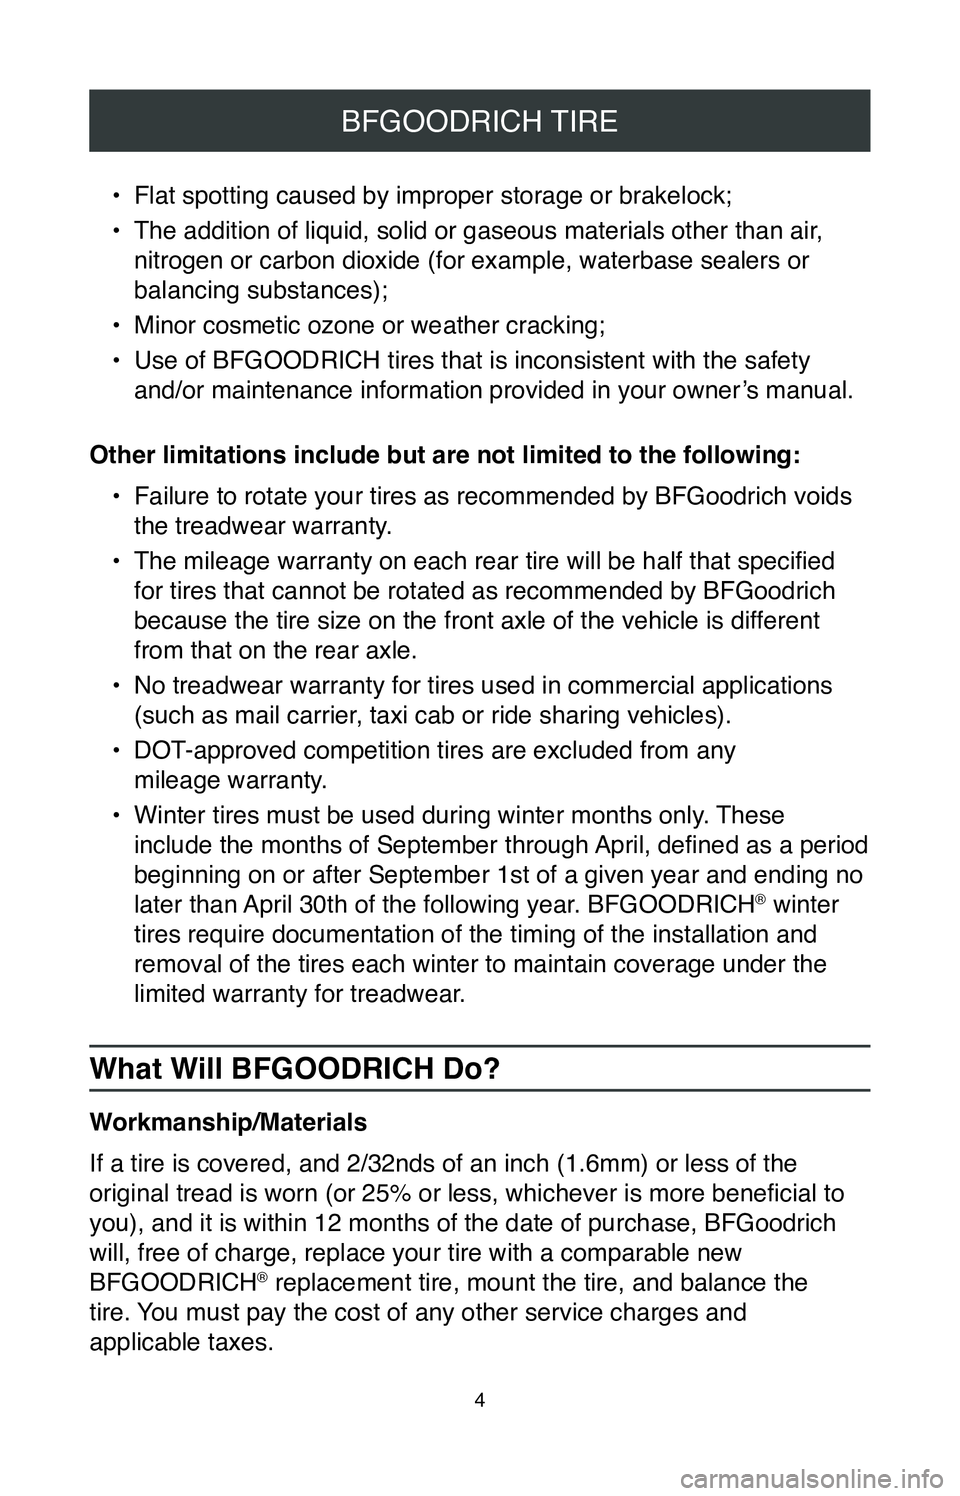 TOYOTA COROLLA HATCHBACK 2020  Warranties & Maintenance Guides (in English) 4
BFGOODRICH TIRE
